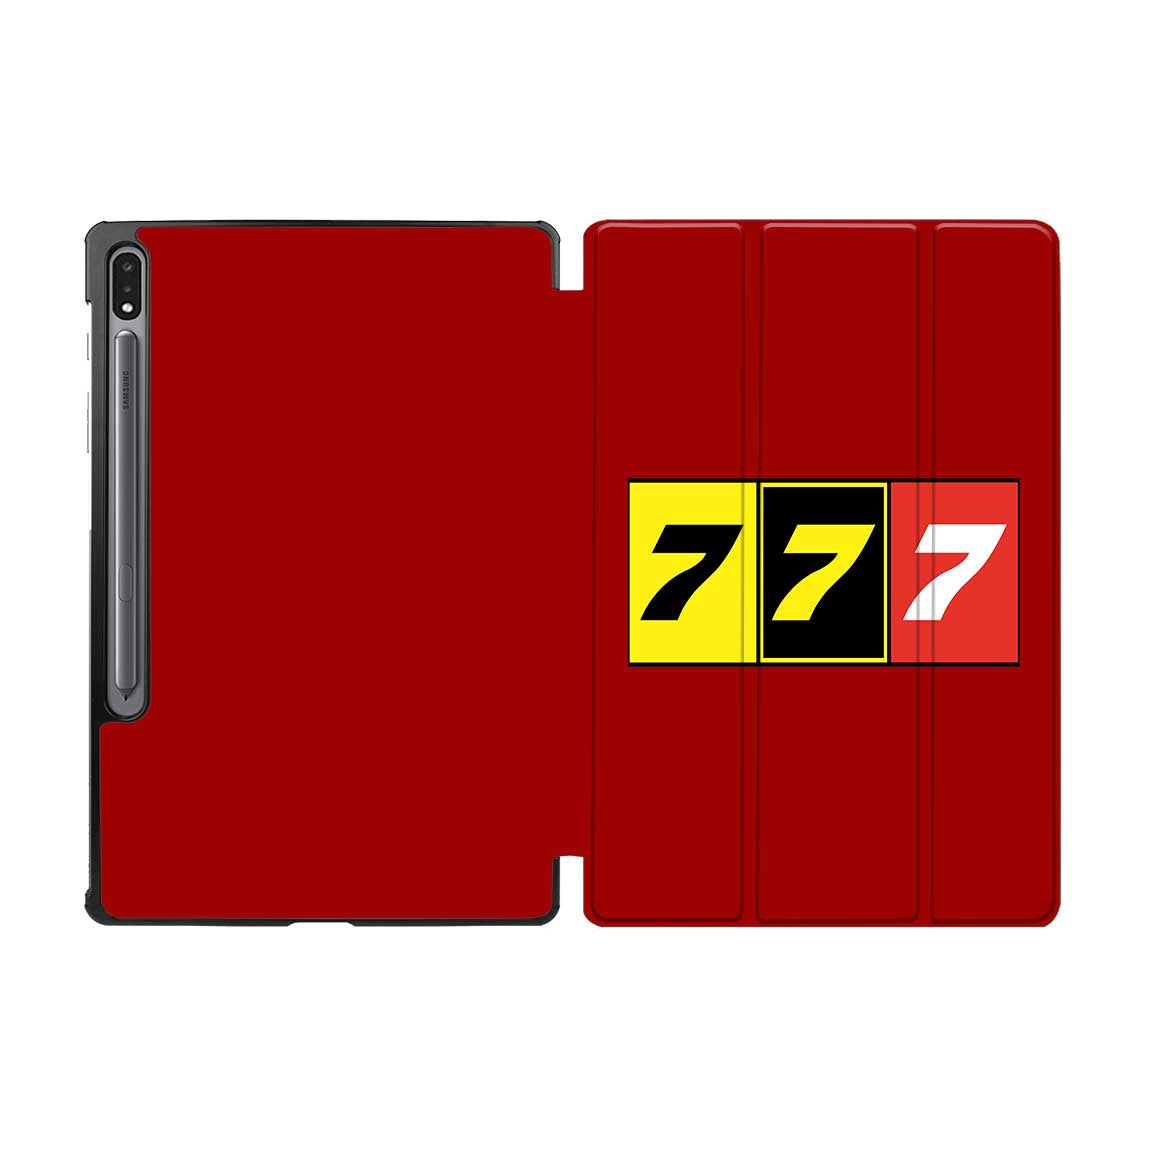 Flat Colourful 777 Designed Samsung Tablet Cases